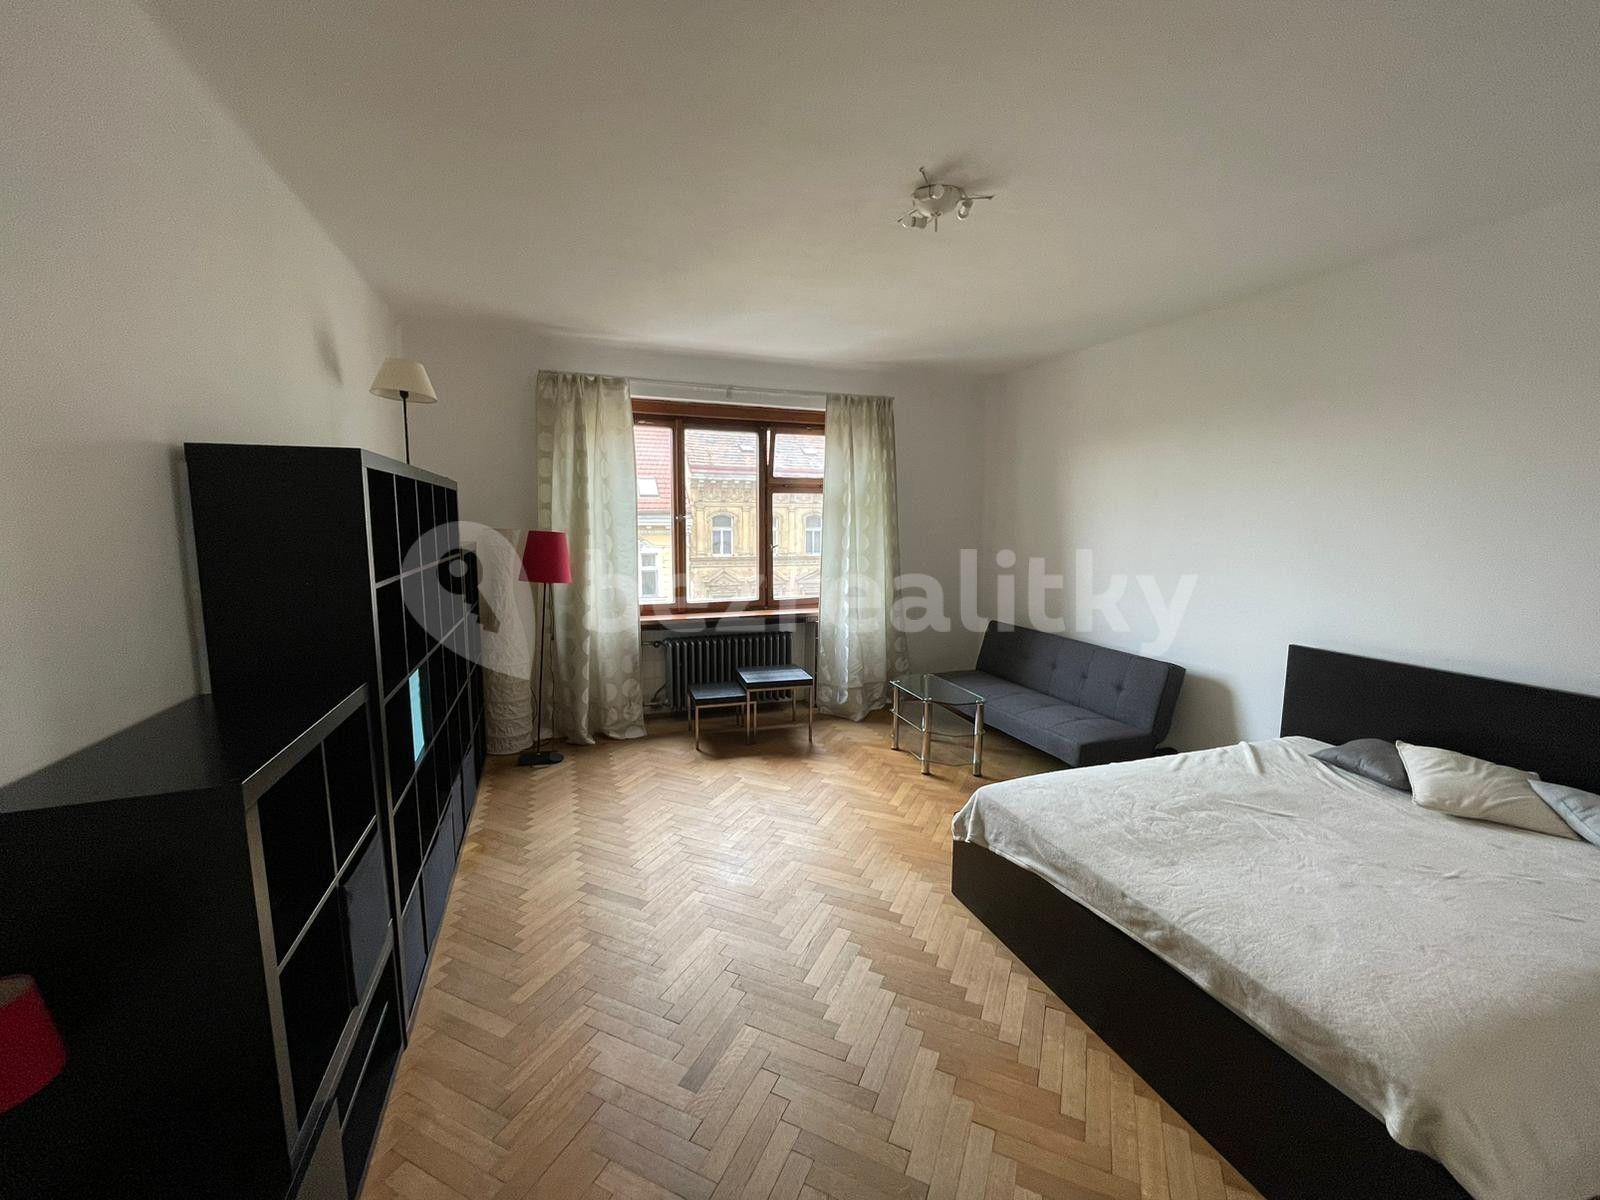 1 bedroom with open-plan kitchen flat to rent, 69 m², Chorvatská, Prague, Prague